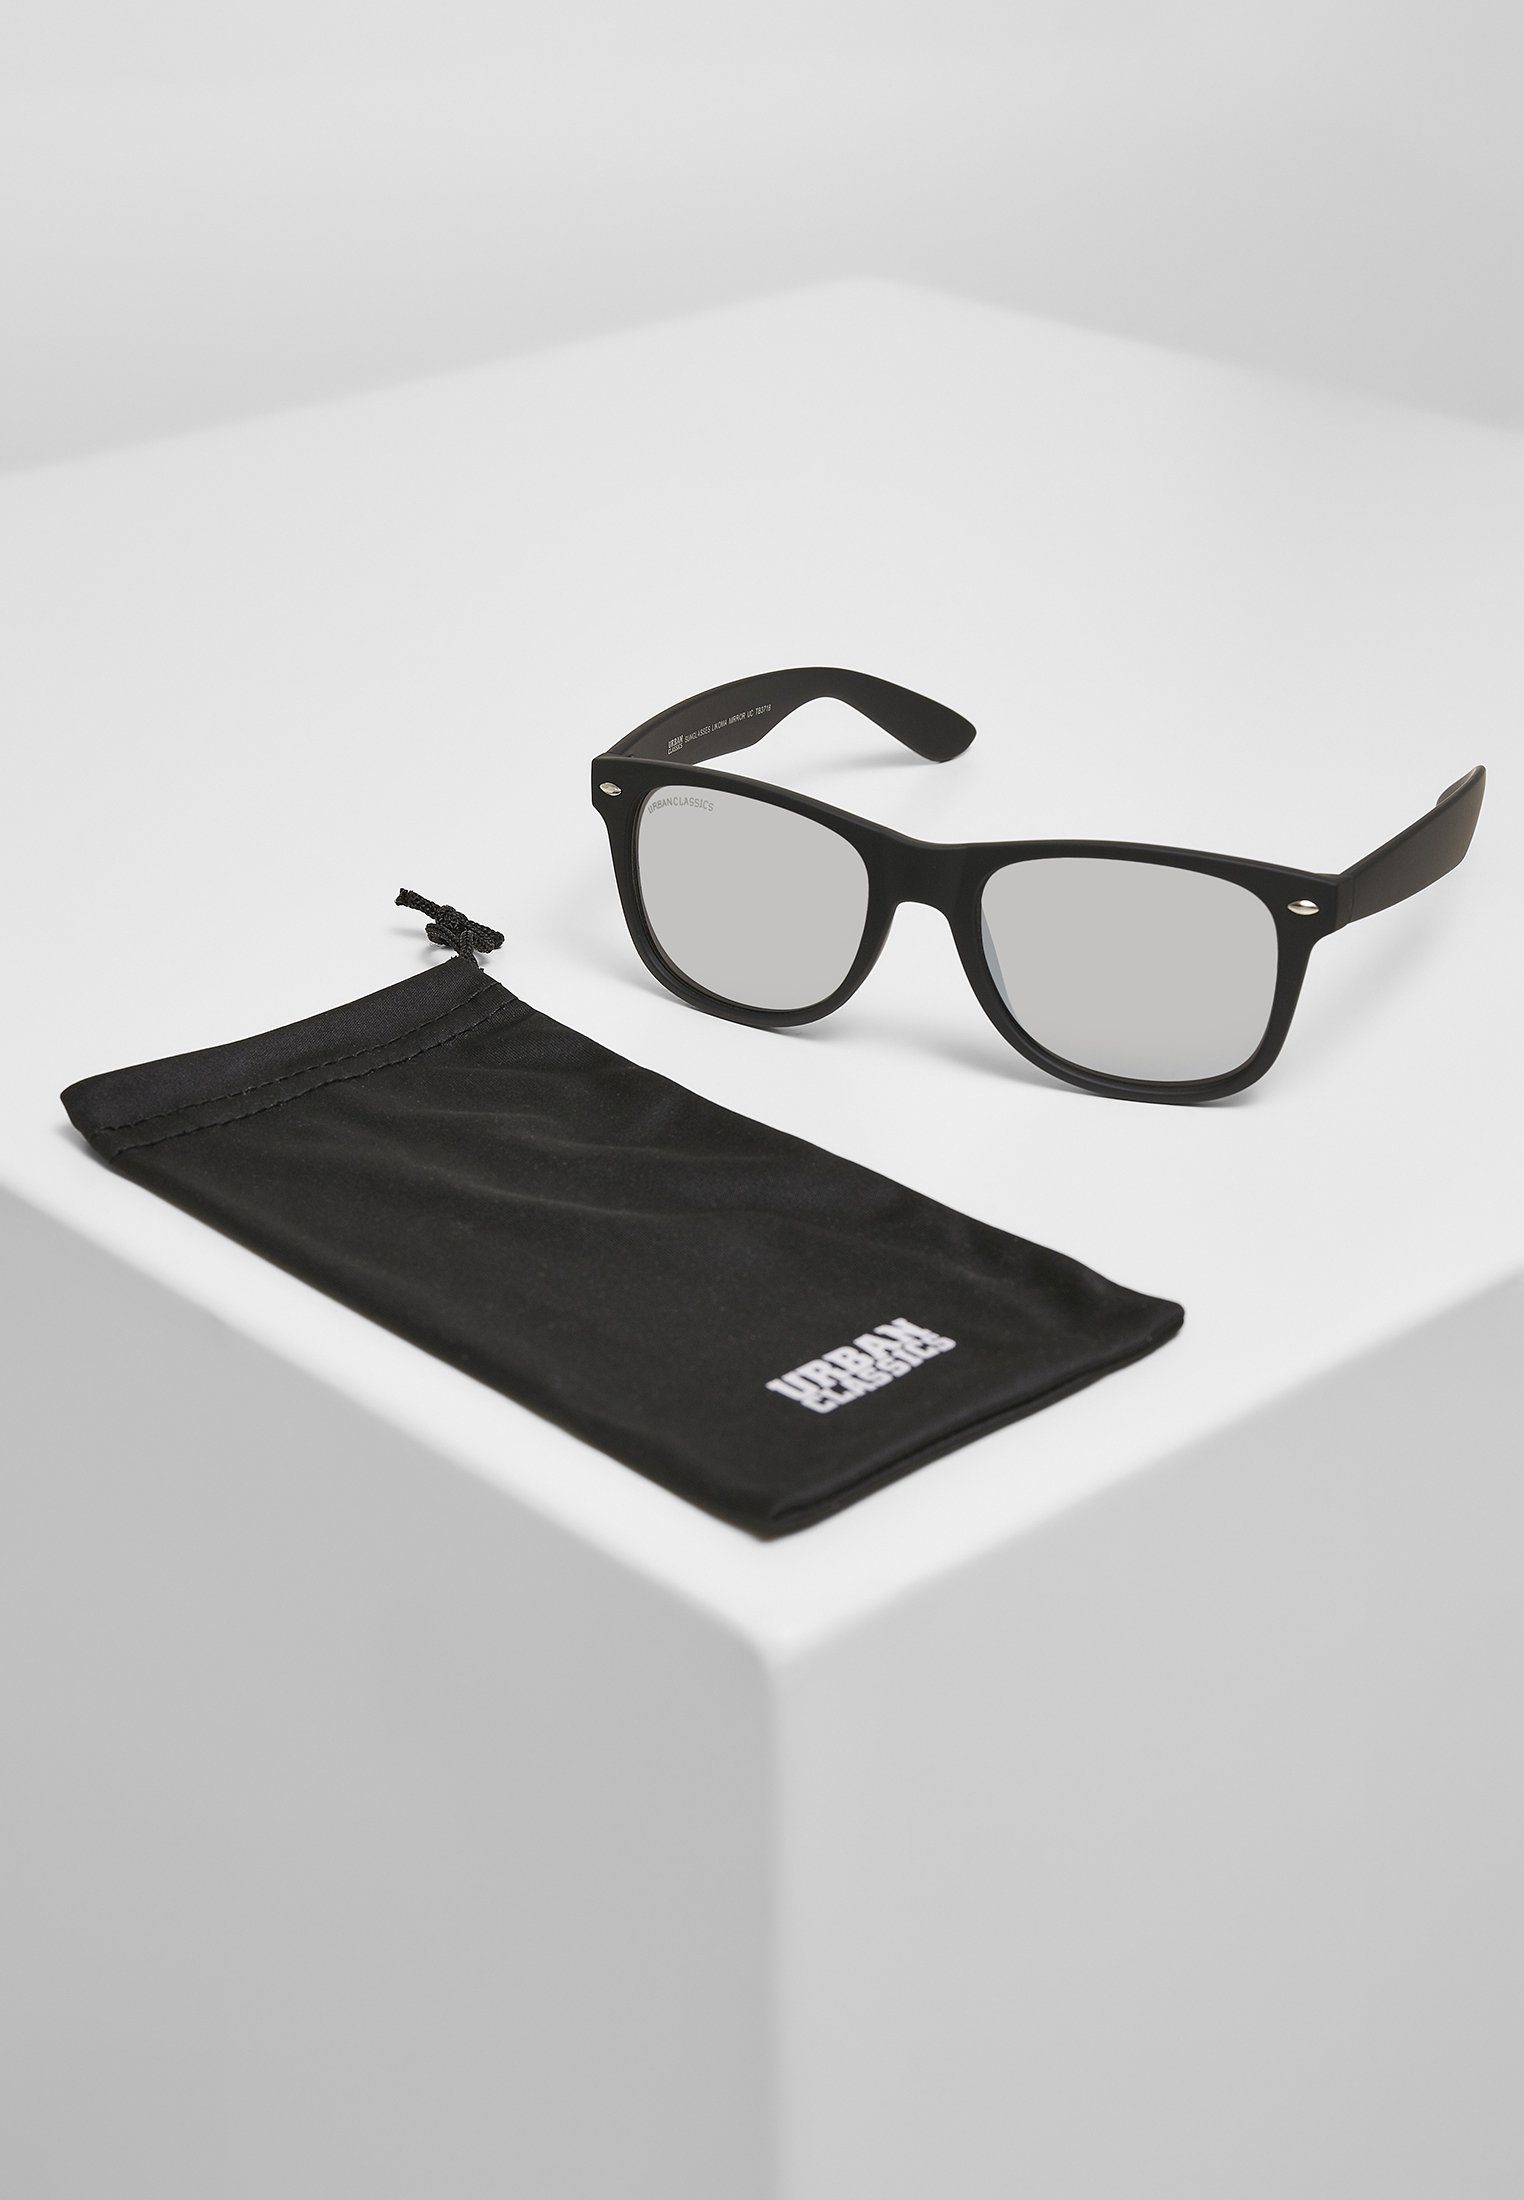 Sonnenbrille URBAN Sunglasses CLASSICS UC black/silver Mirror Accessoires Likoma